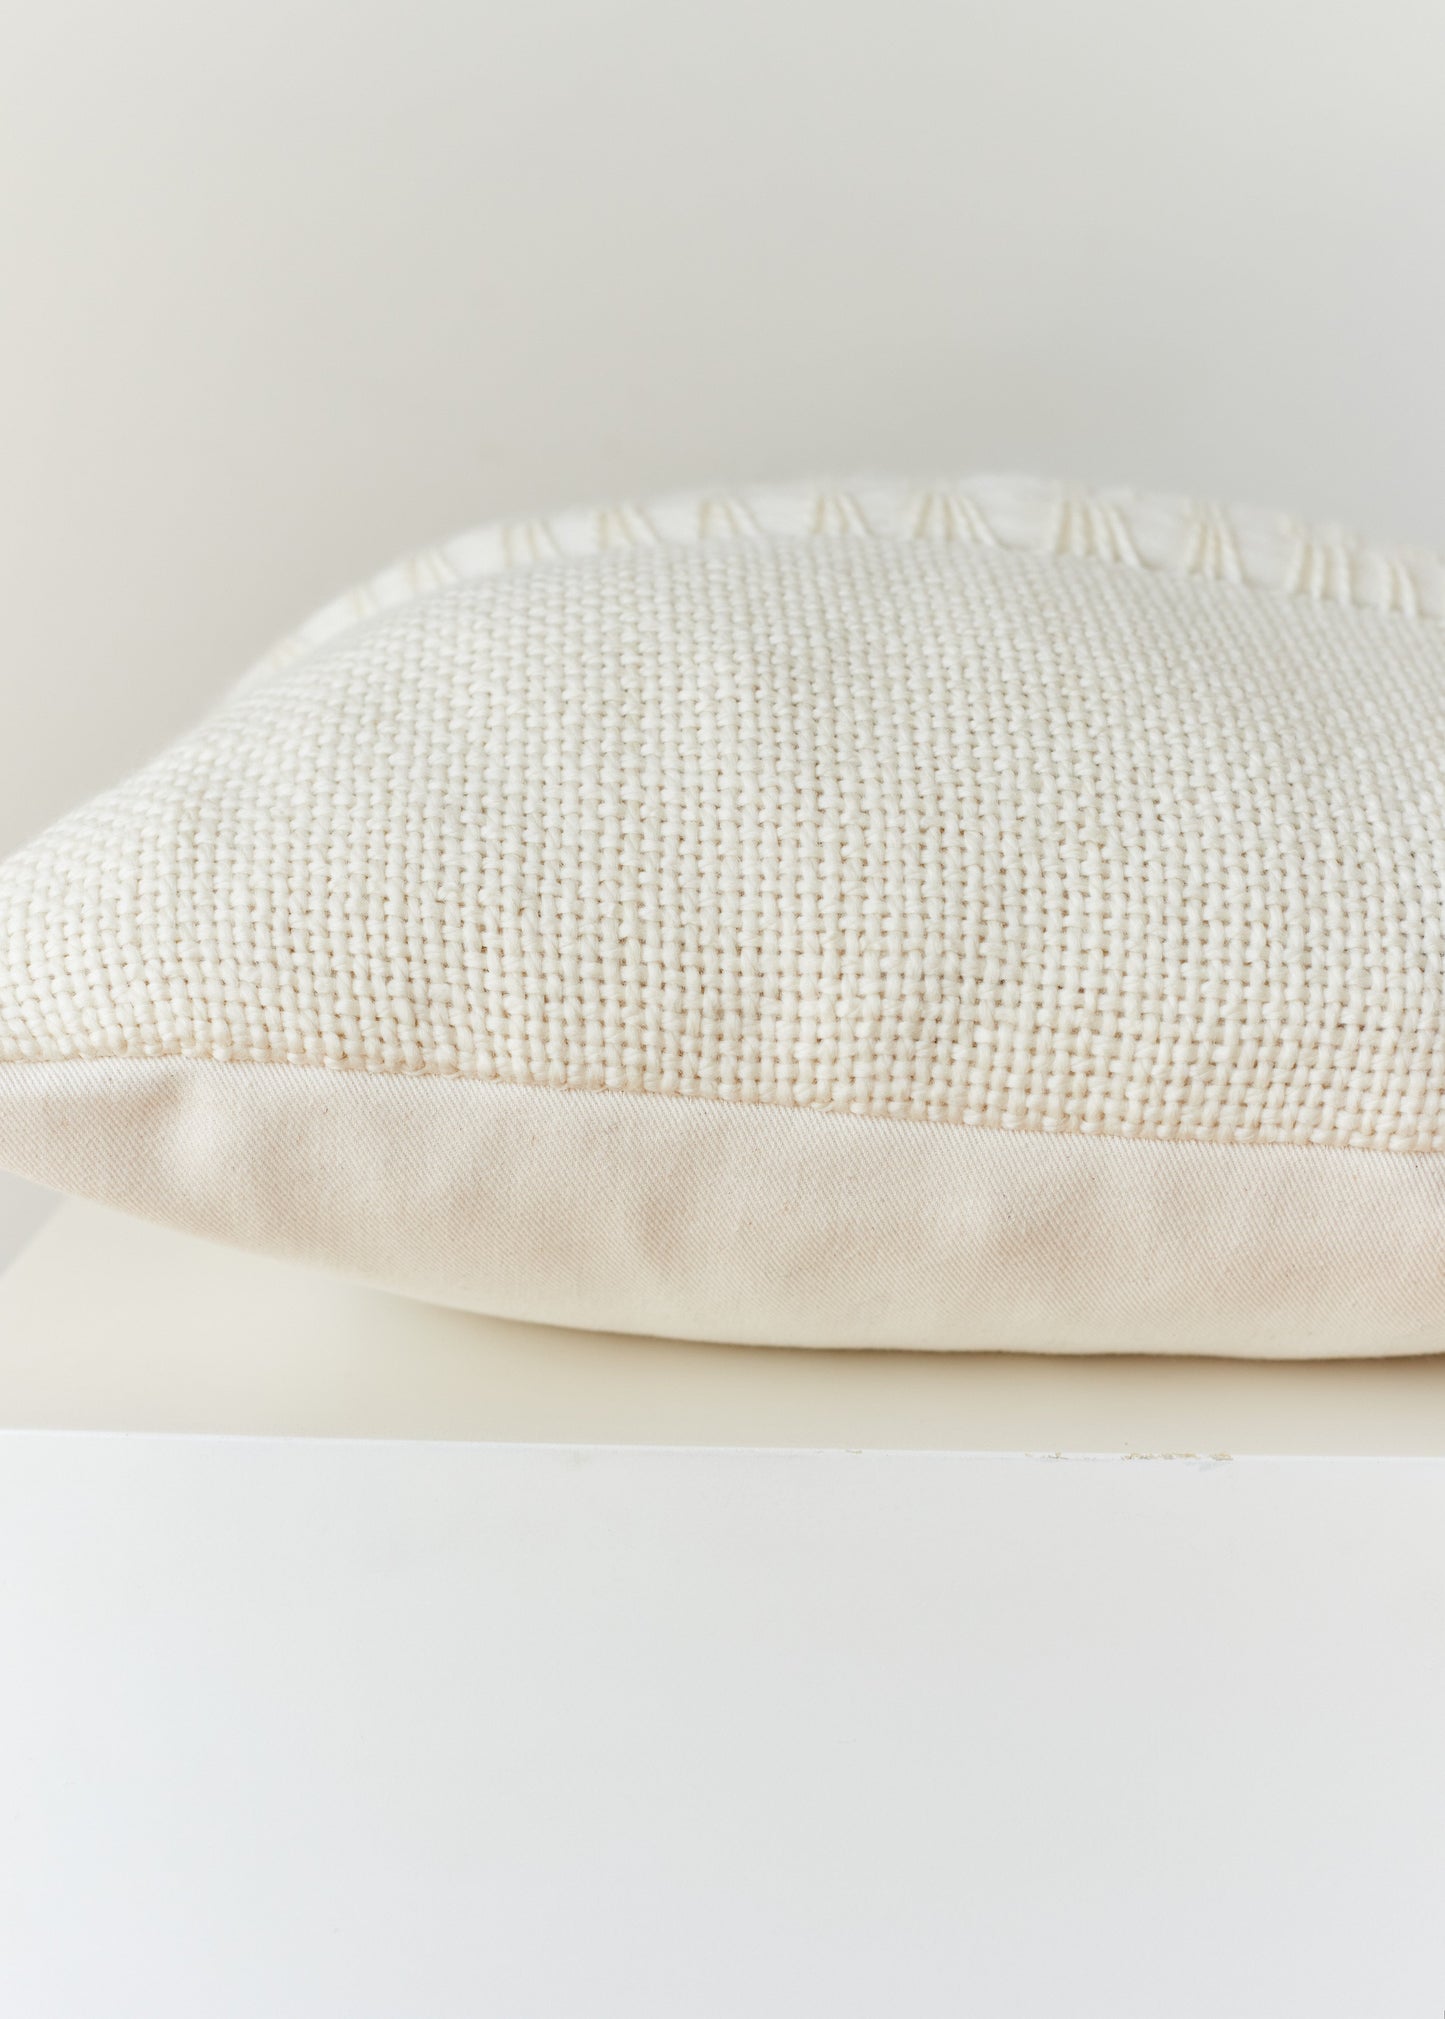 CUSTOM ORDER Luxury Pillow Cover Textured in Merino Wool Lua 35x35 cms